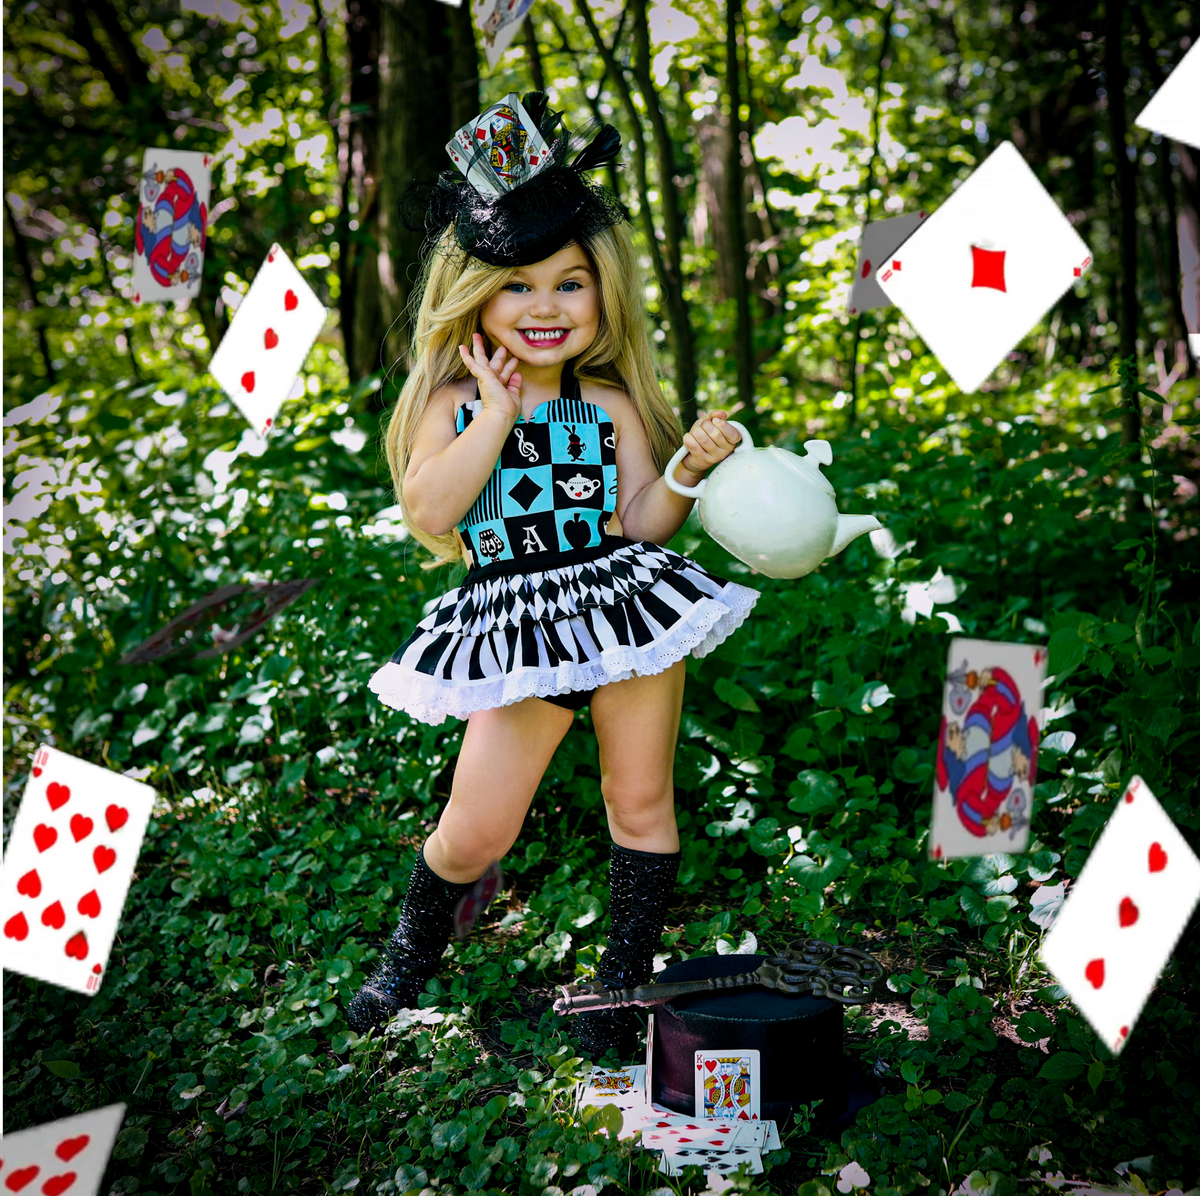 Alice in Wonderland inspired Romper & Apron – JaydenandOlivia